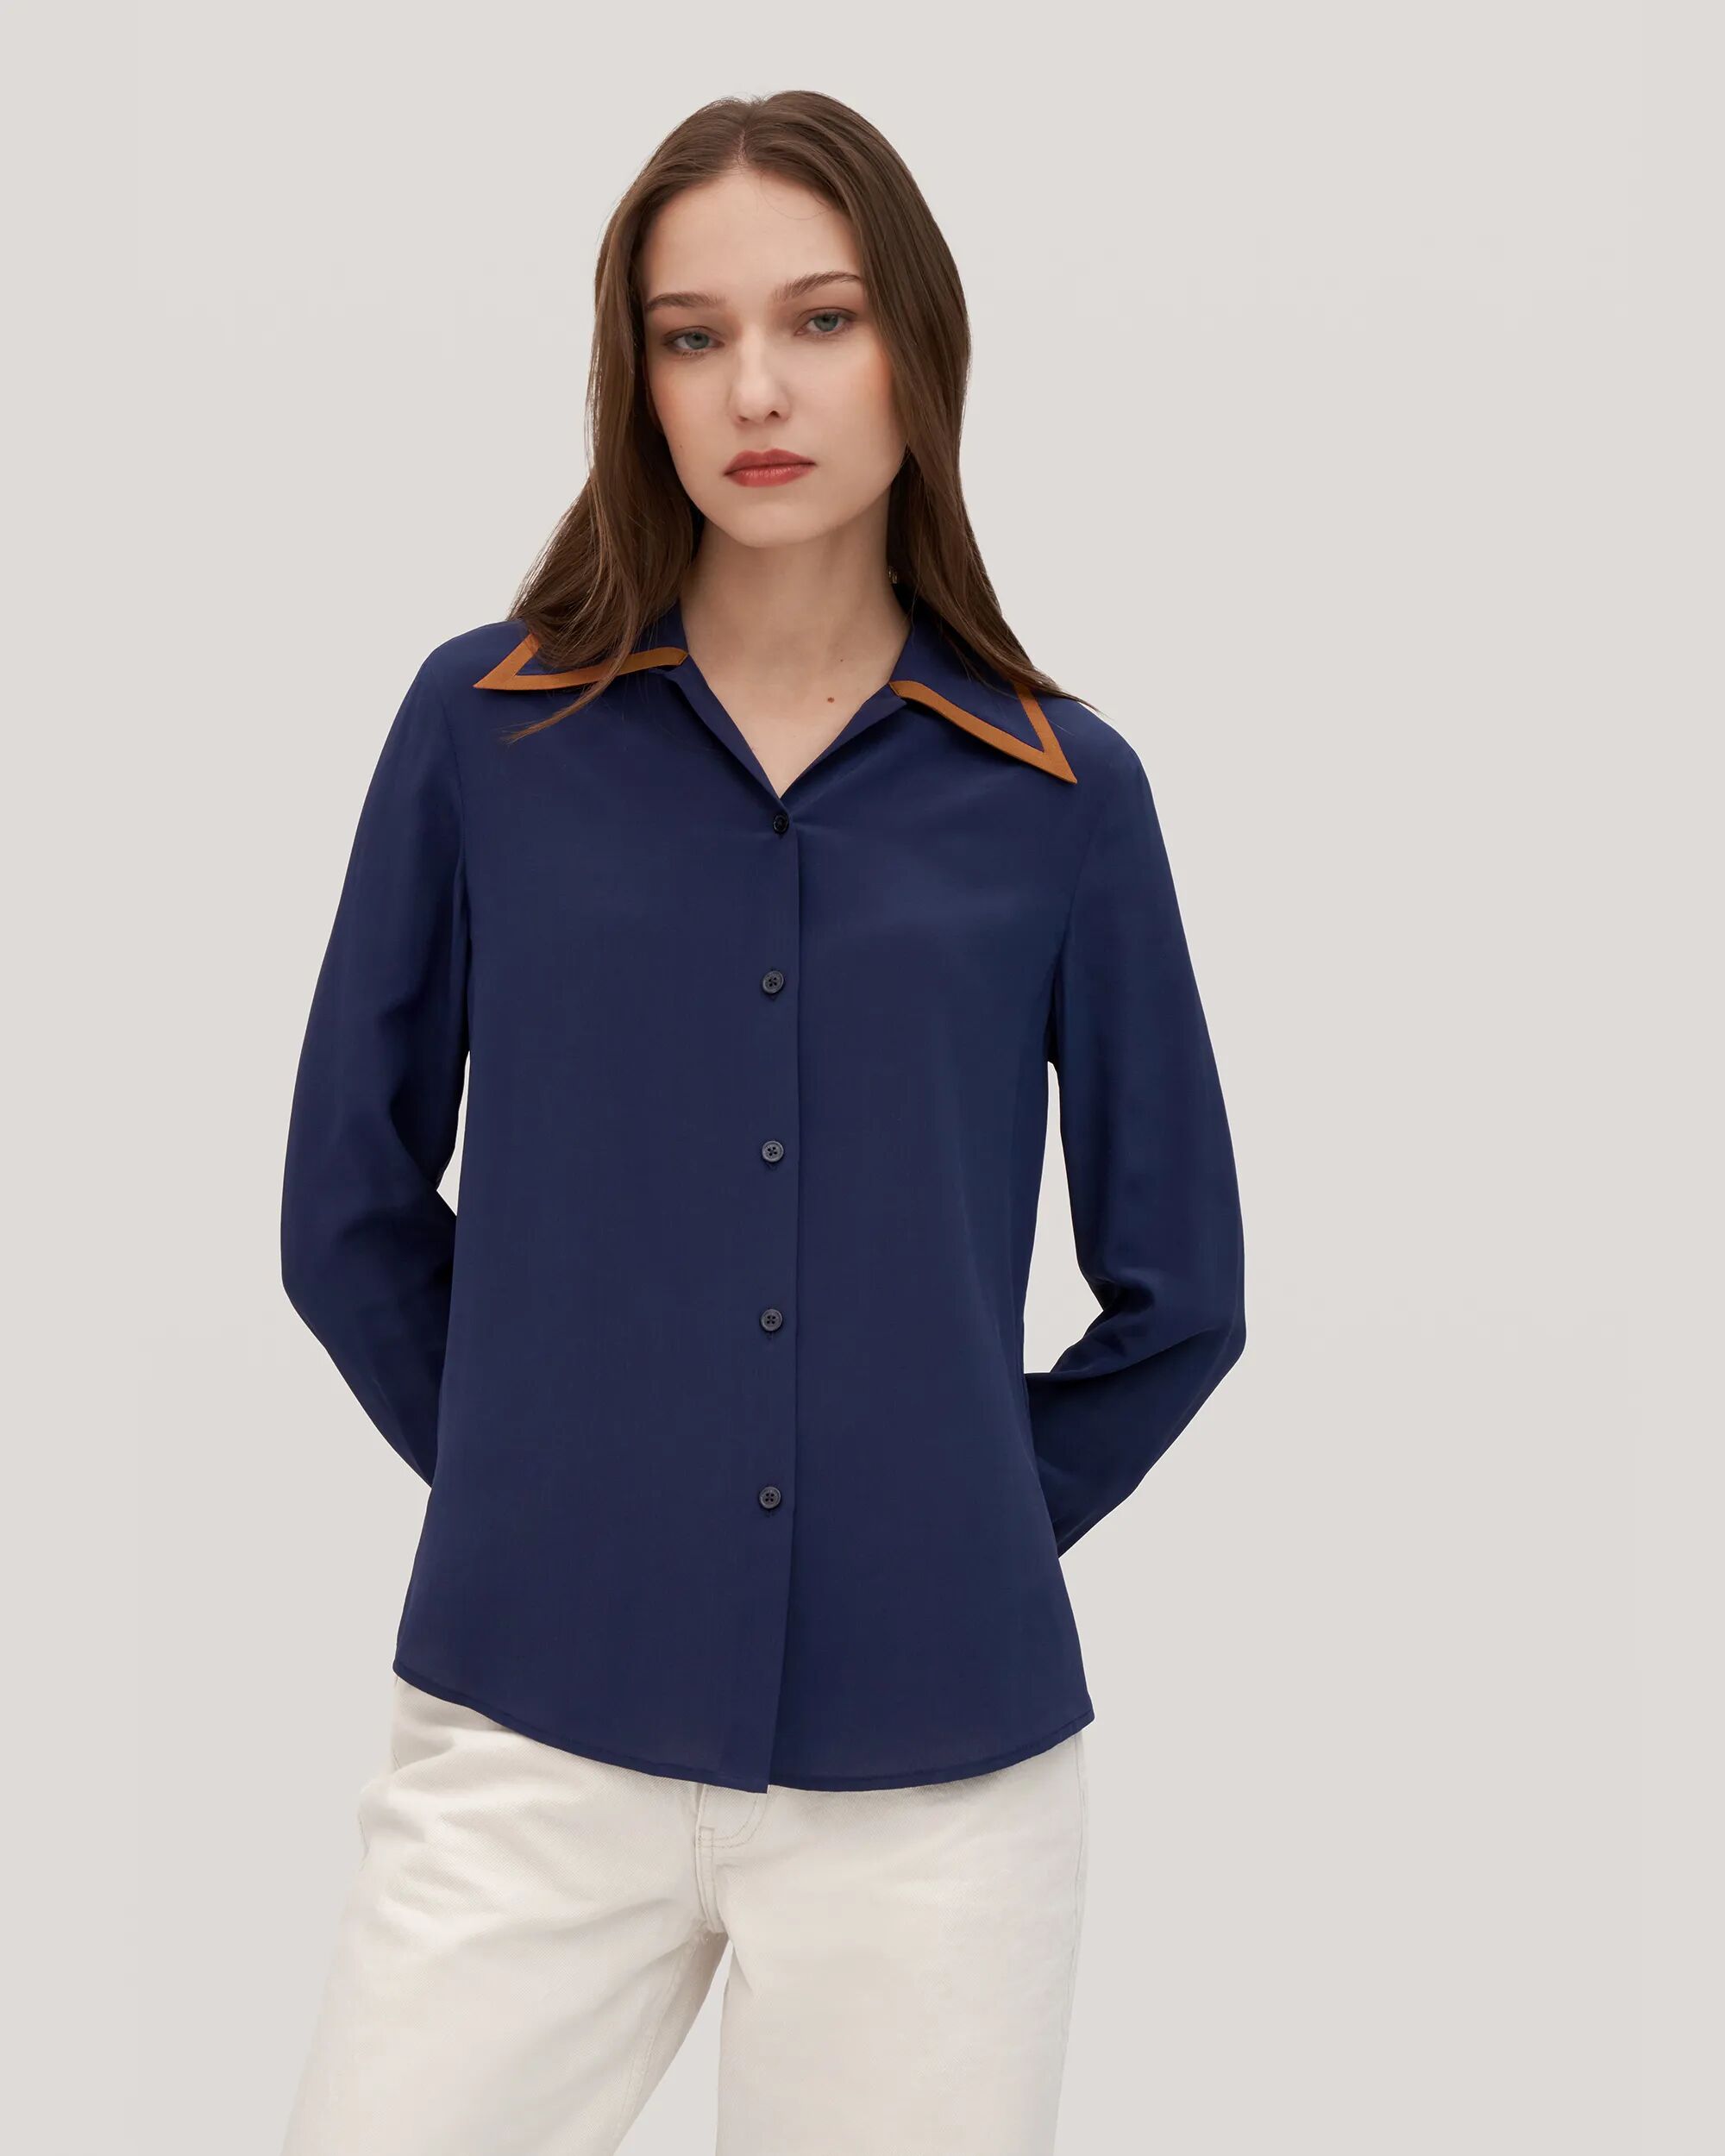 LILYSILK Business Blue Striped Shirt   Silk Collar Style   Women Silk Shirts Navy 18 Momme Pointed Split Hem Free Of Harmful Chemicals L